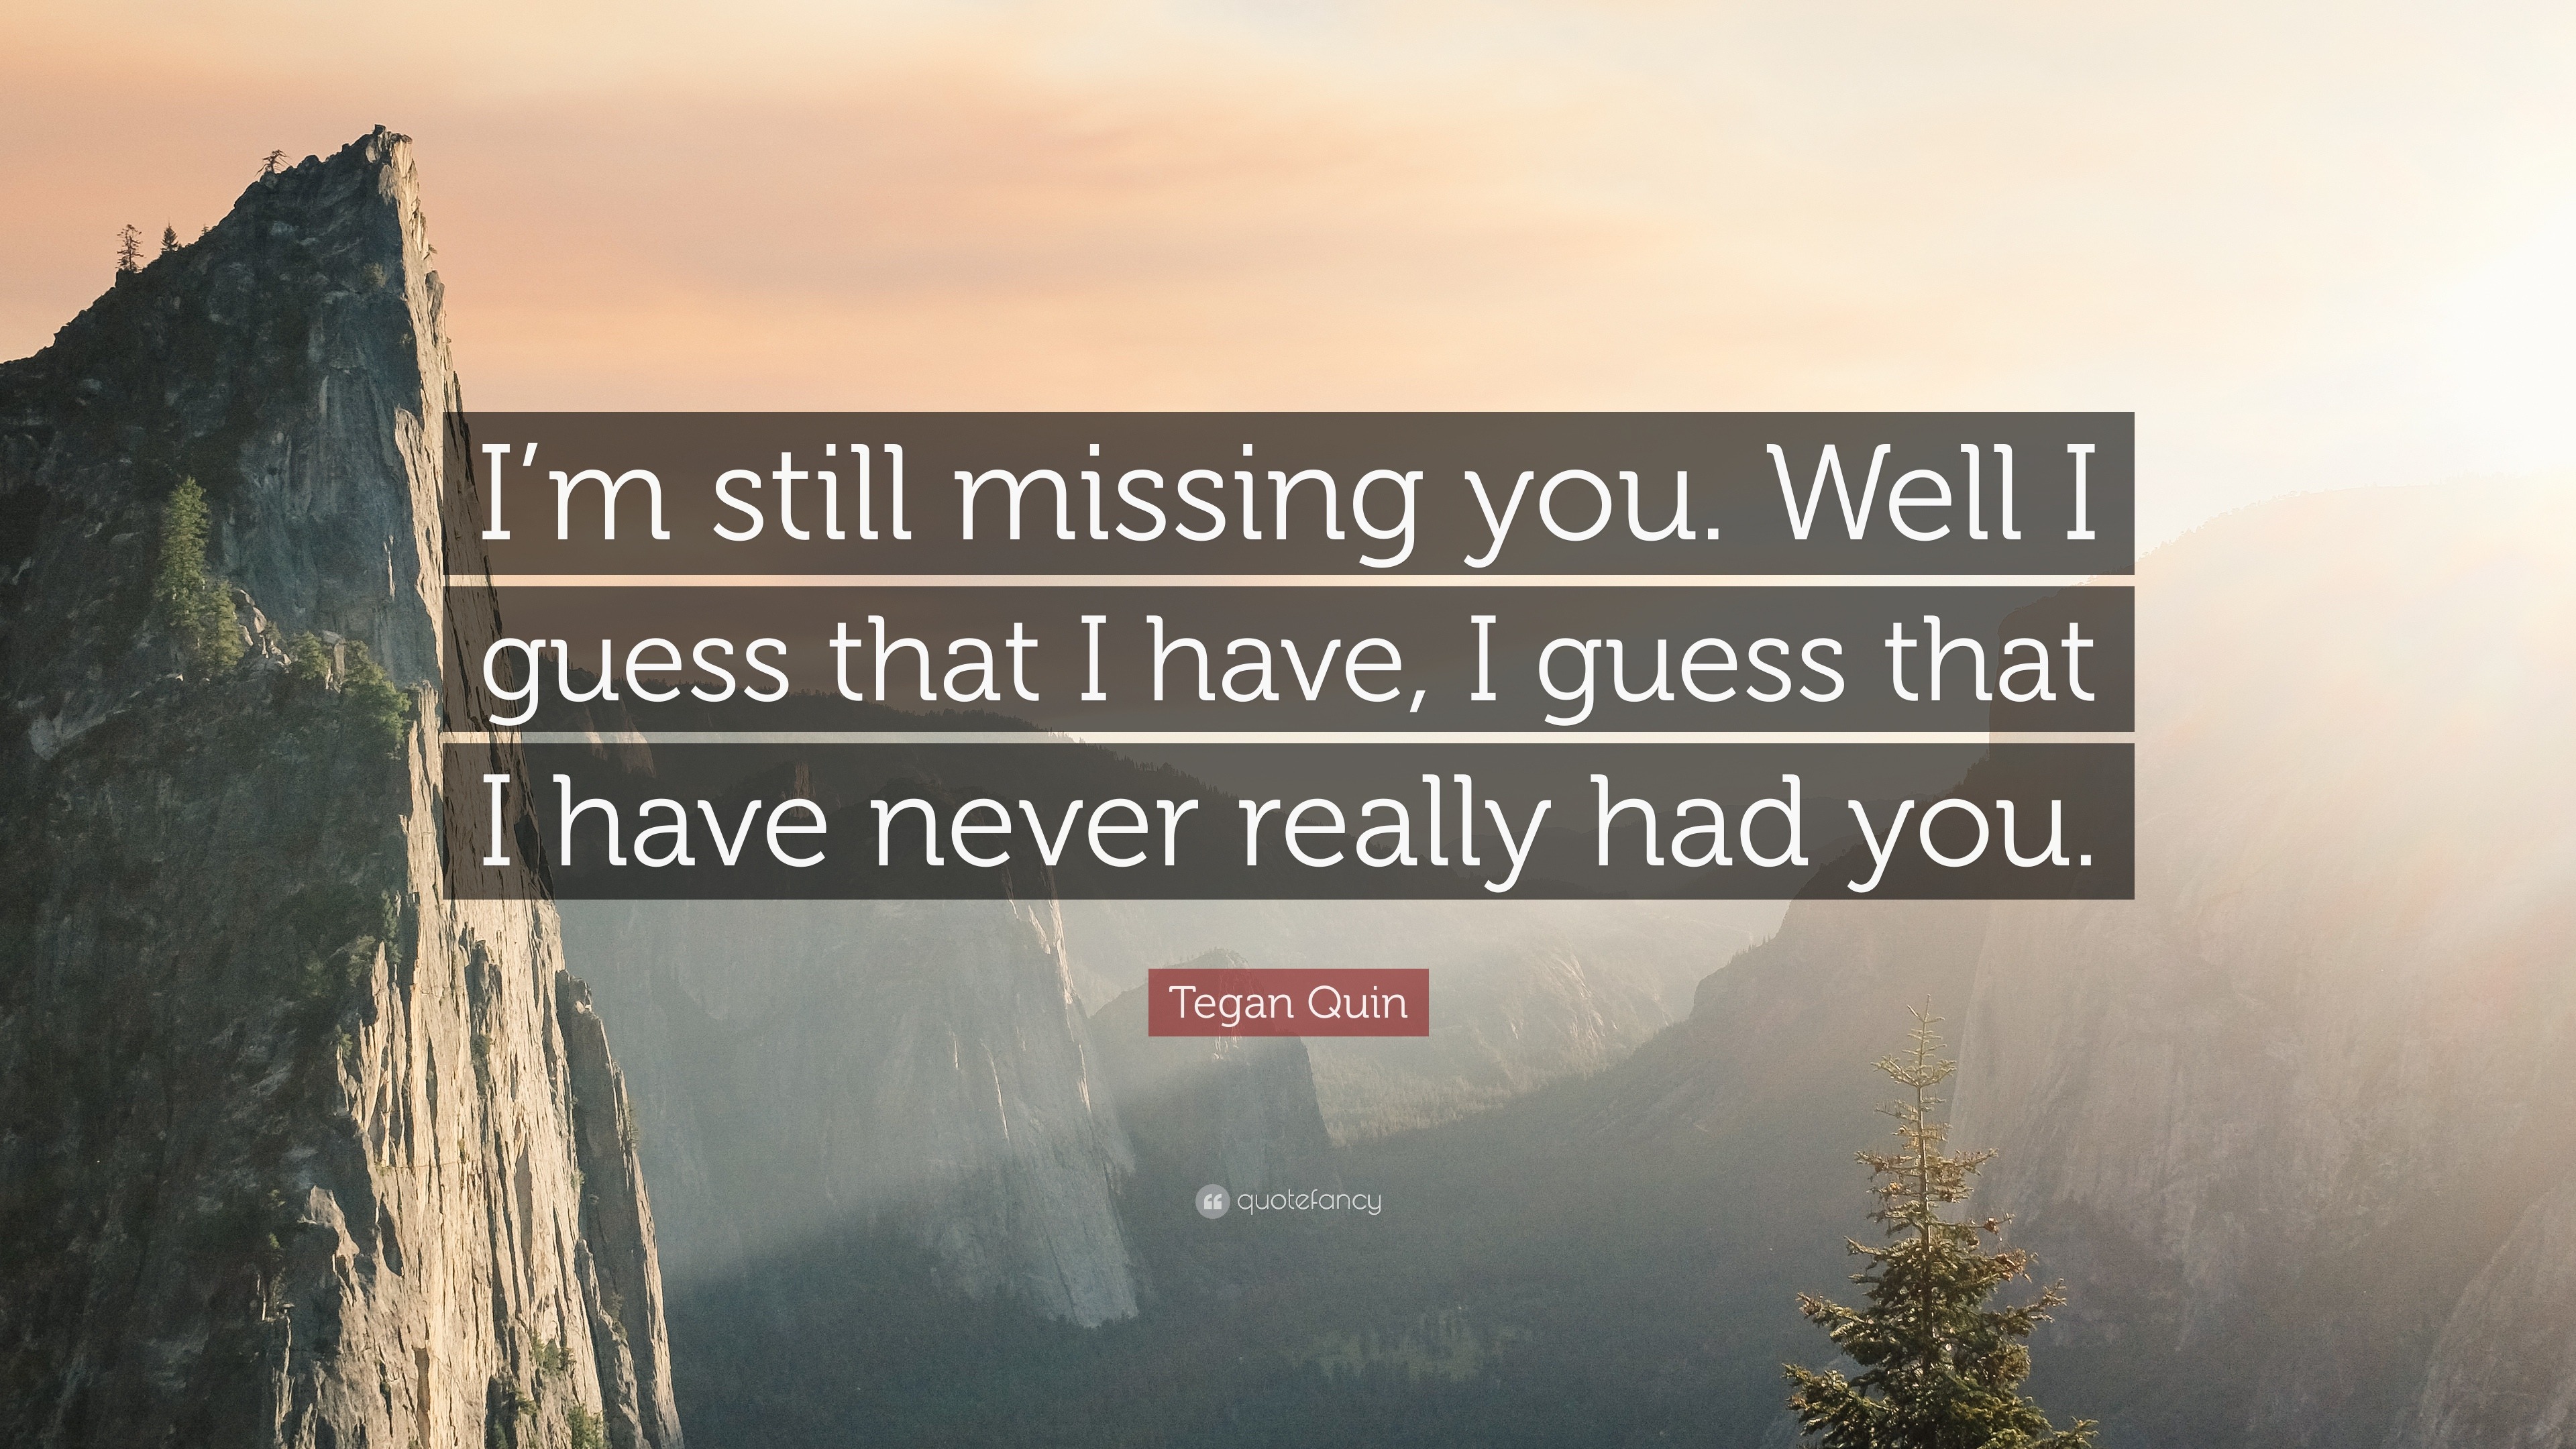 Tegan Quin “I'm still missing you. Well I guess that I I